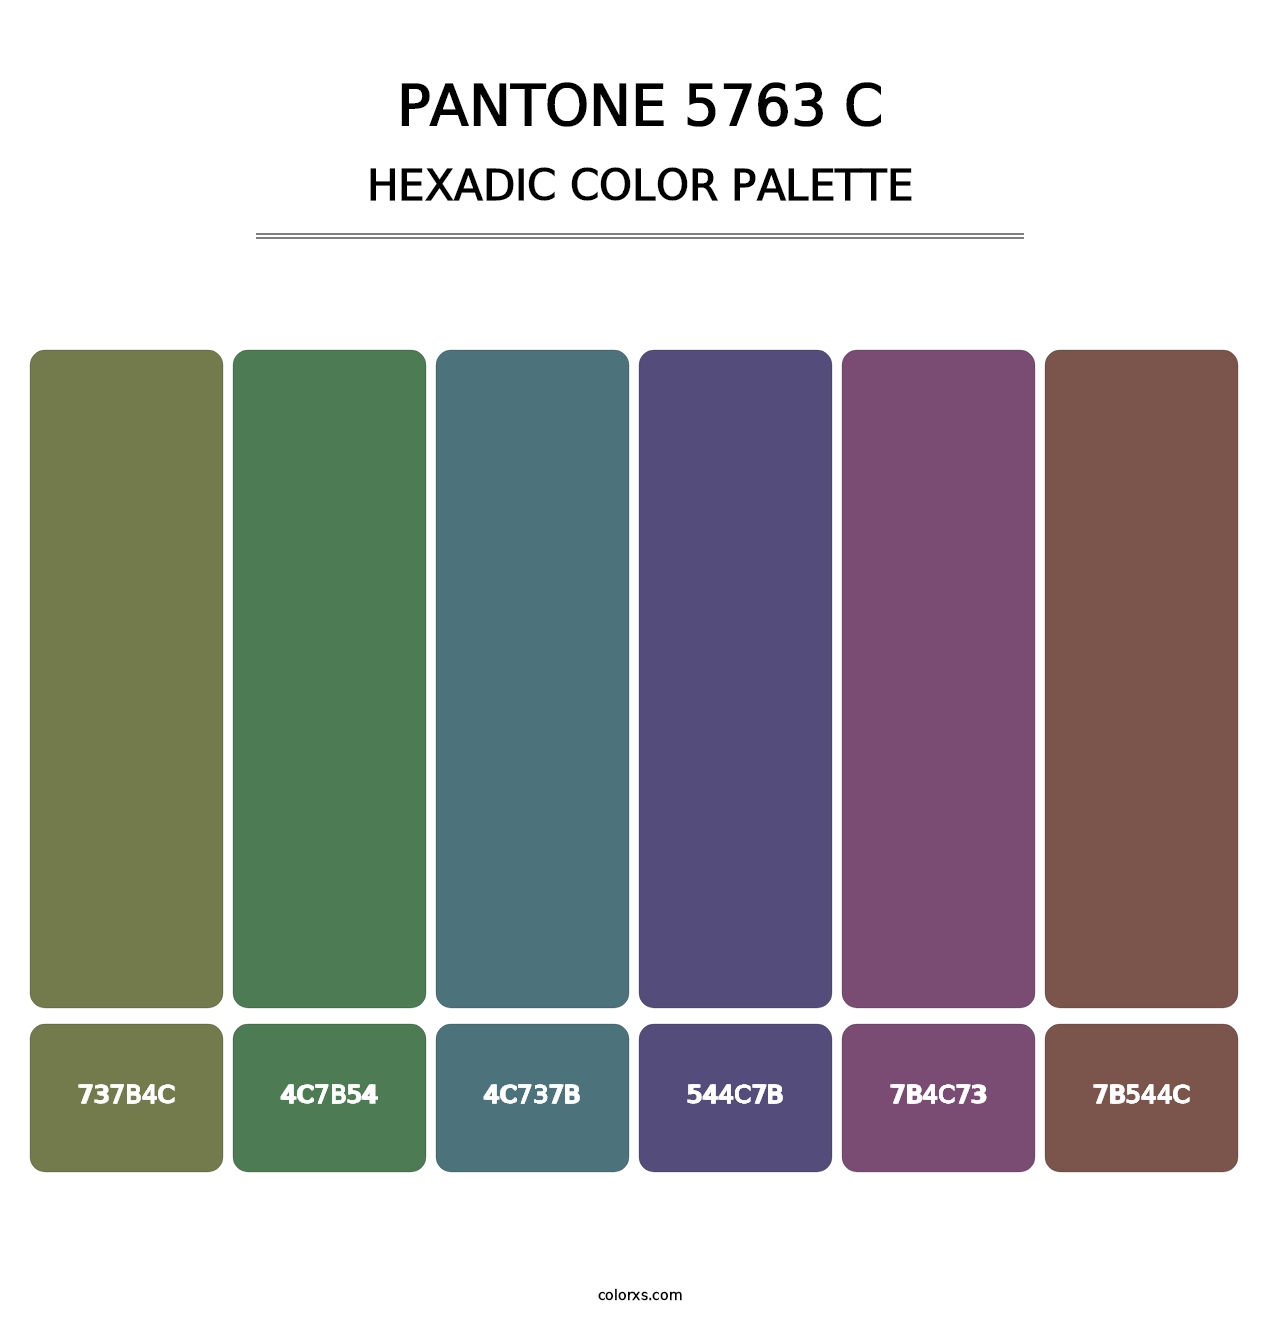 PANTONE 5763 C - Hexadic Color Palette